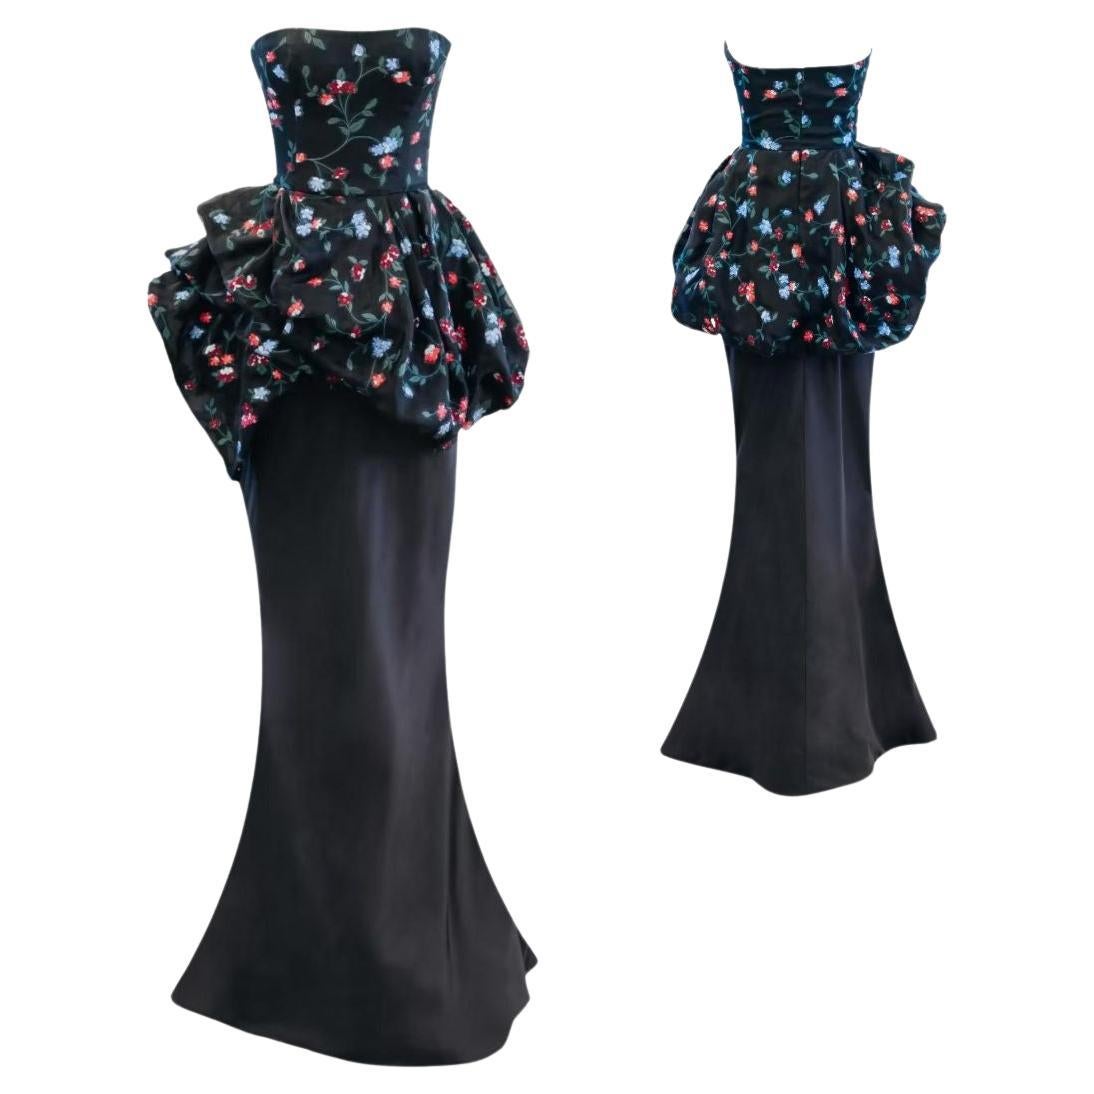 Oscar de la Renta Black Floral Evening Gown Resort 2014 Size 4
